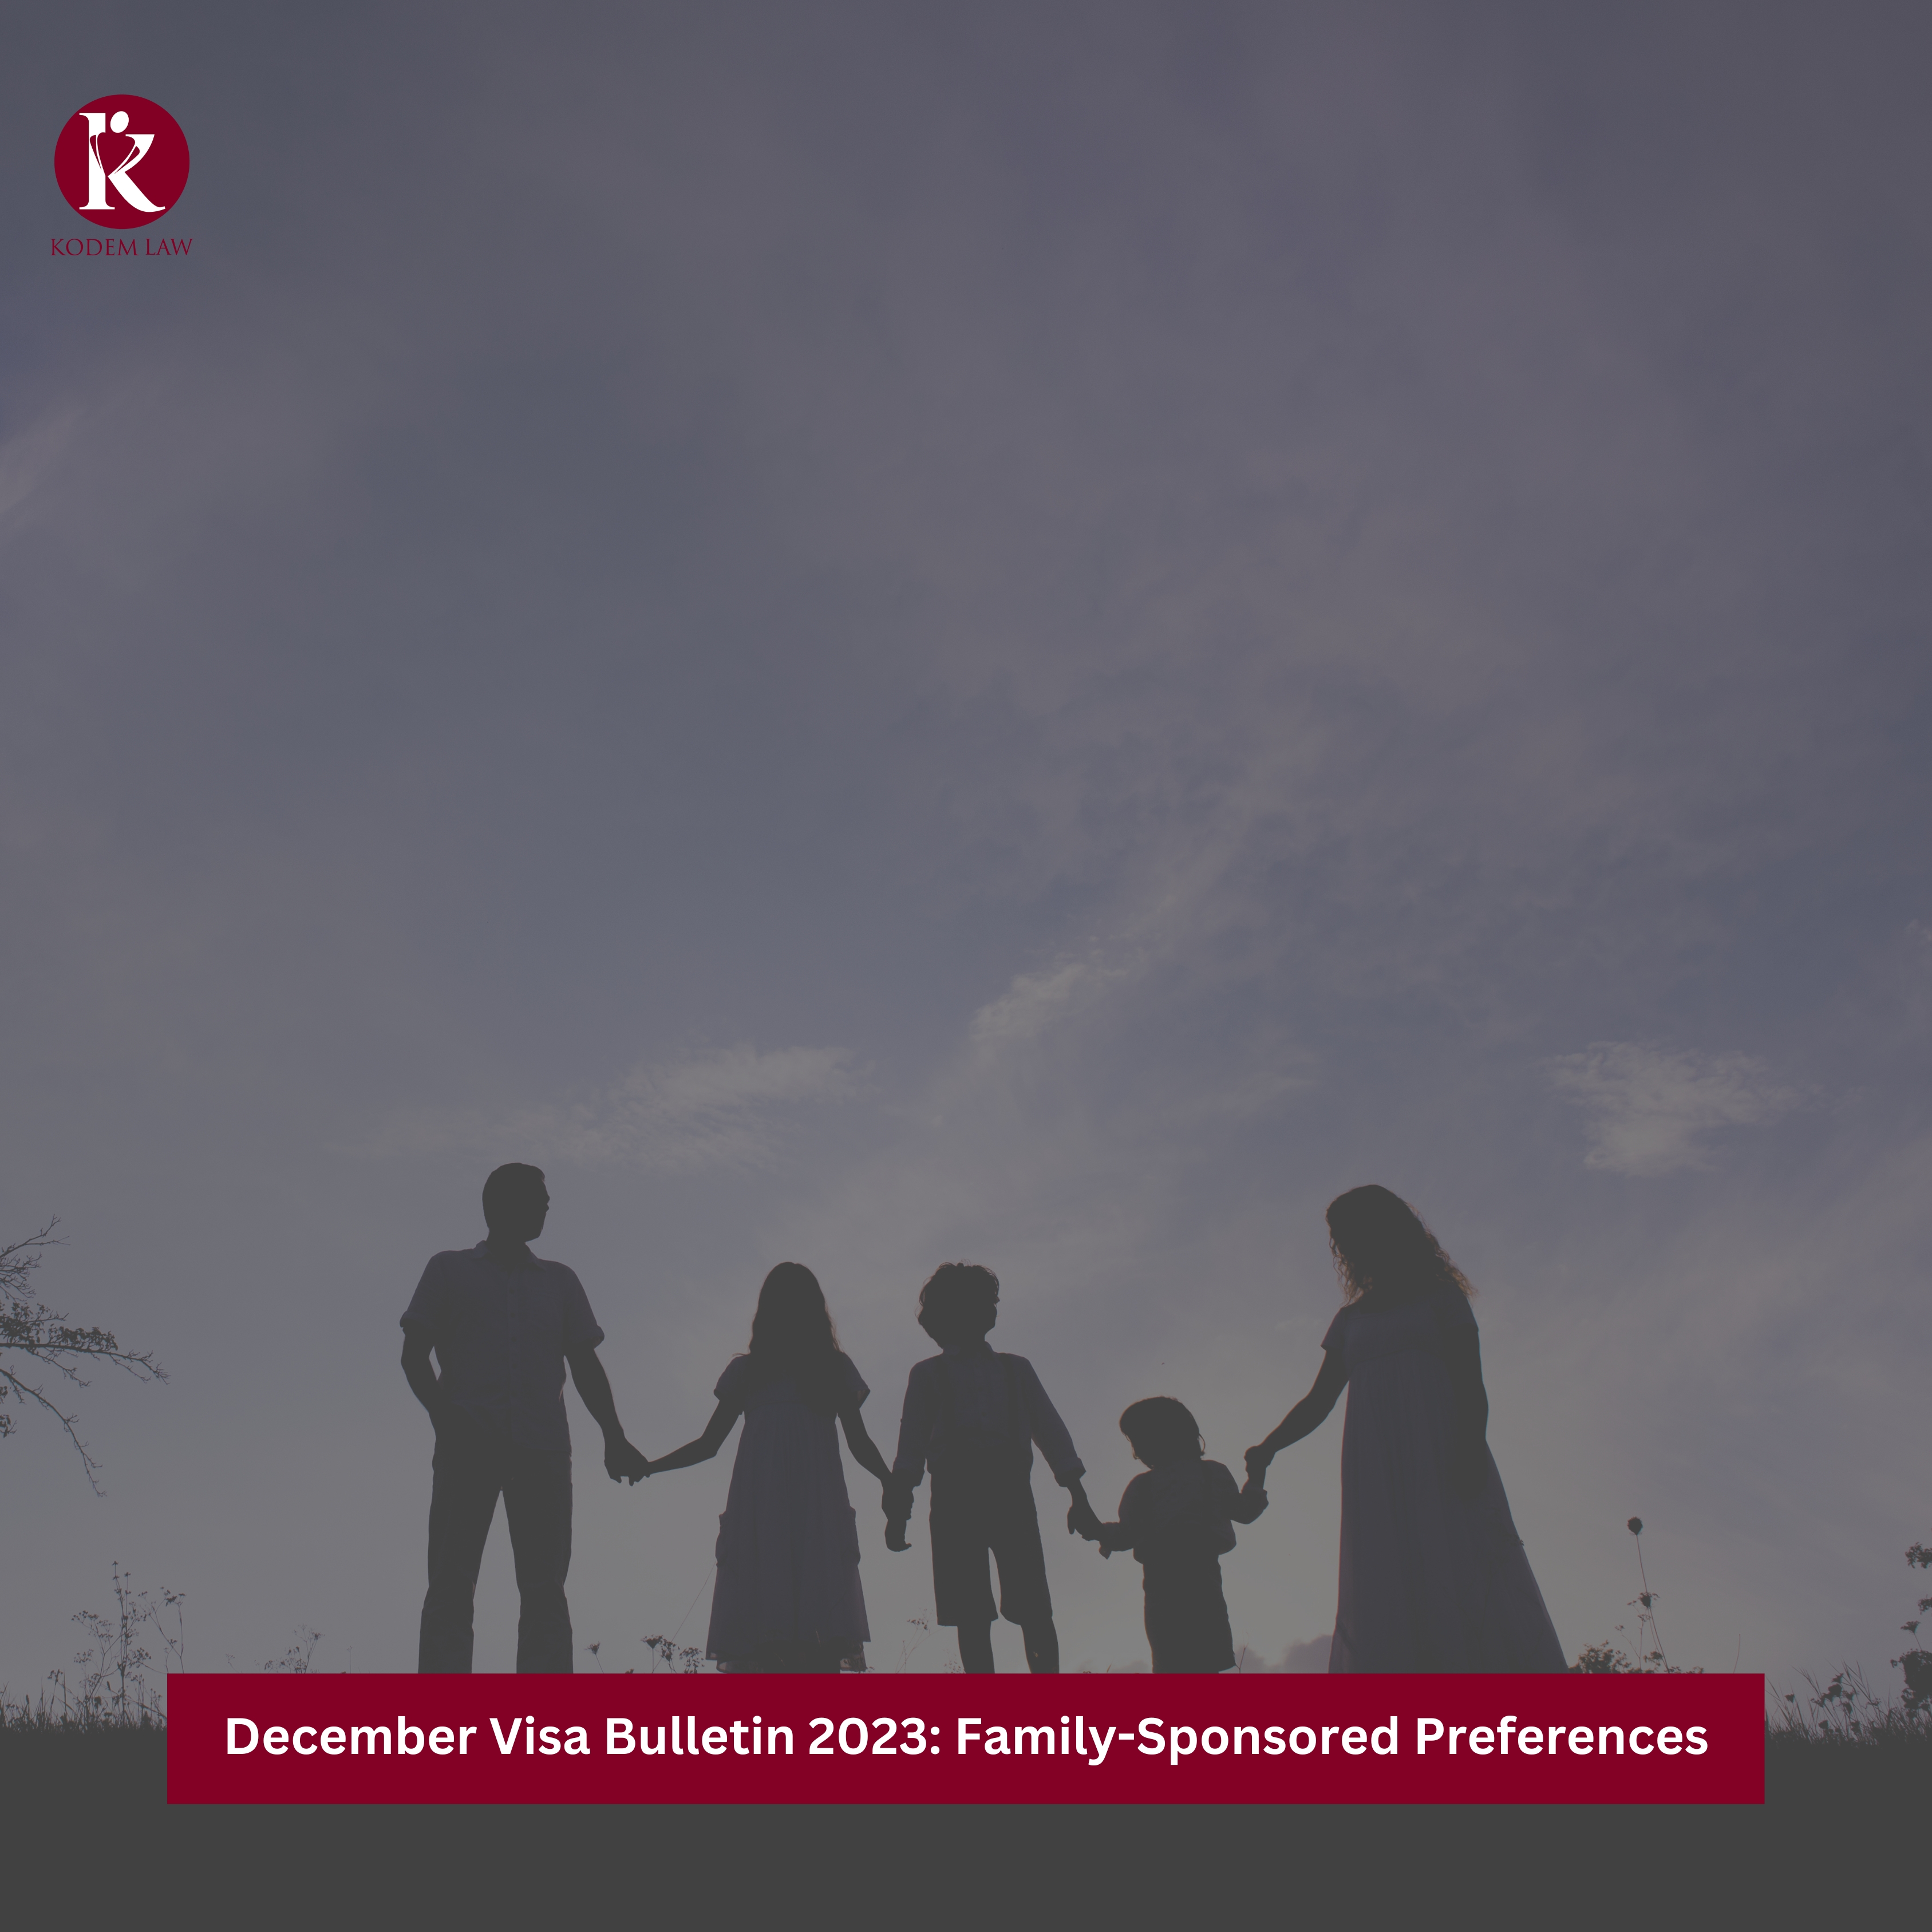 December Visa Bulletin 2023 Family-Sponsored Preferences